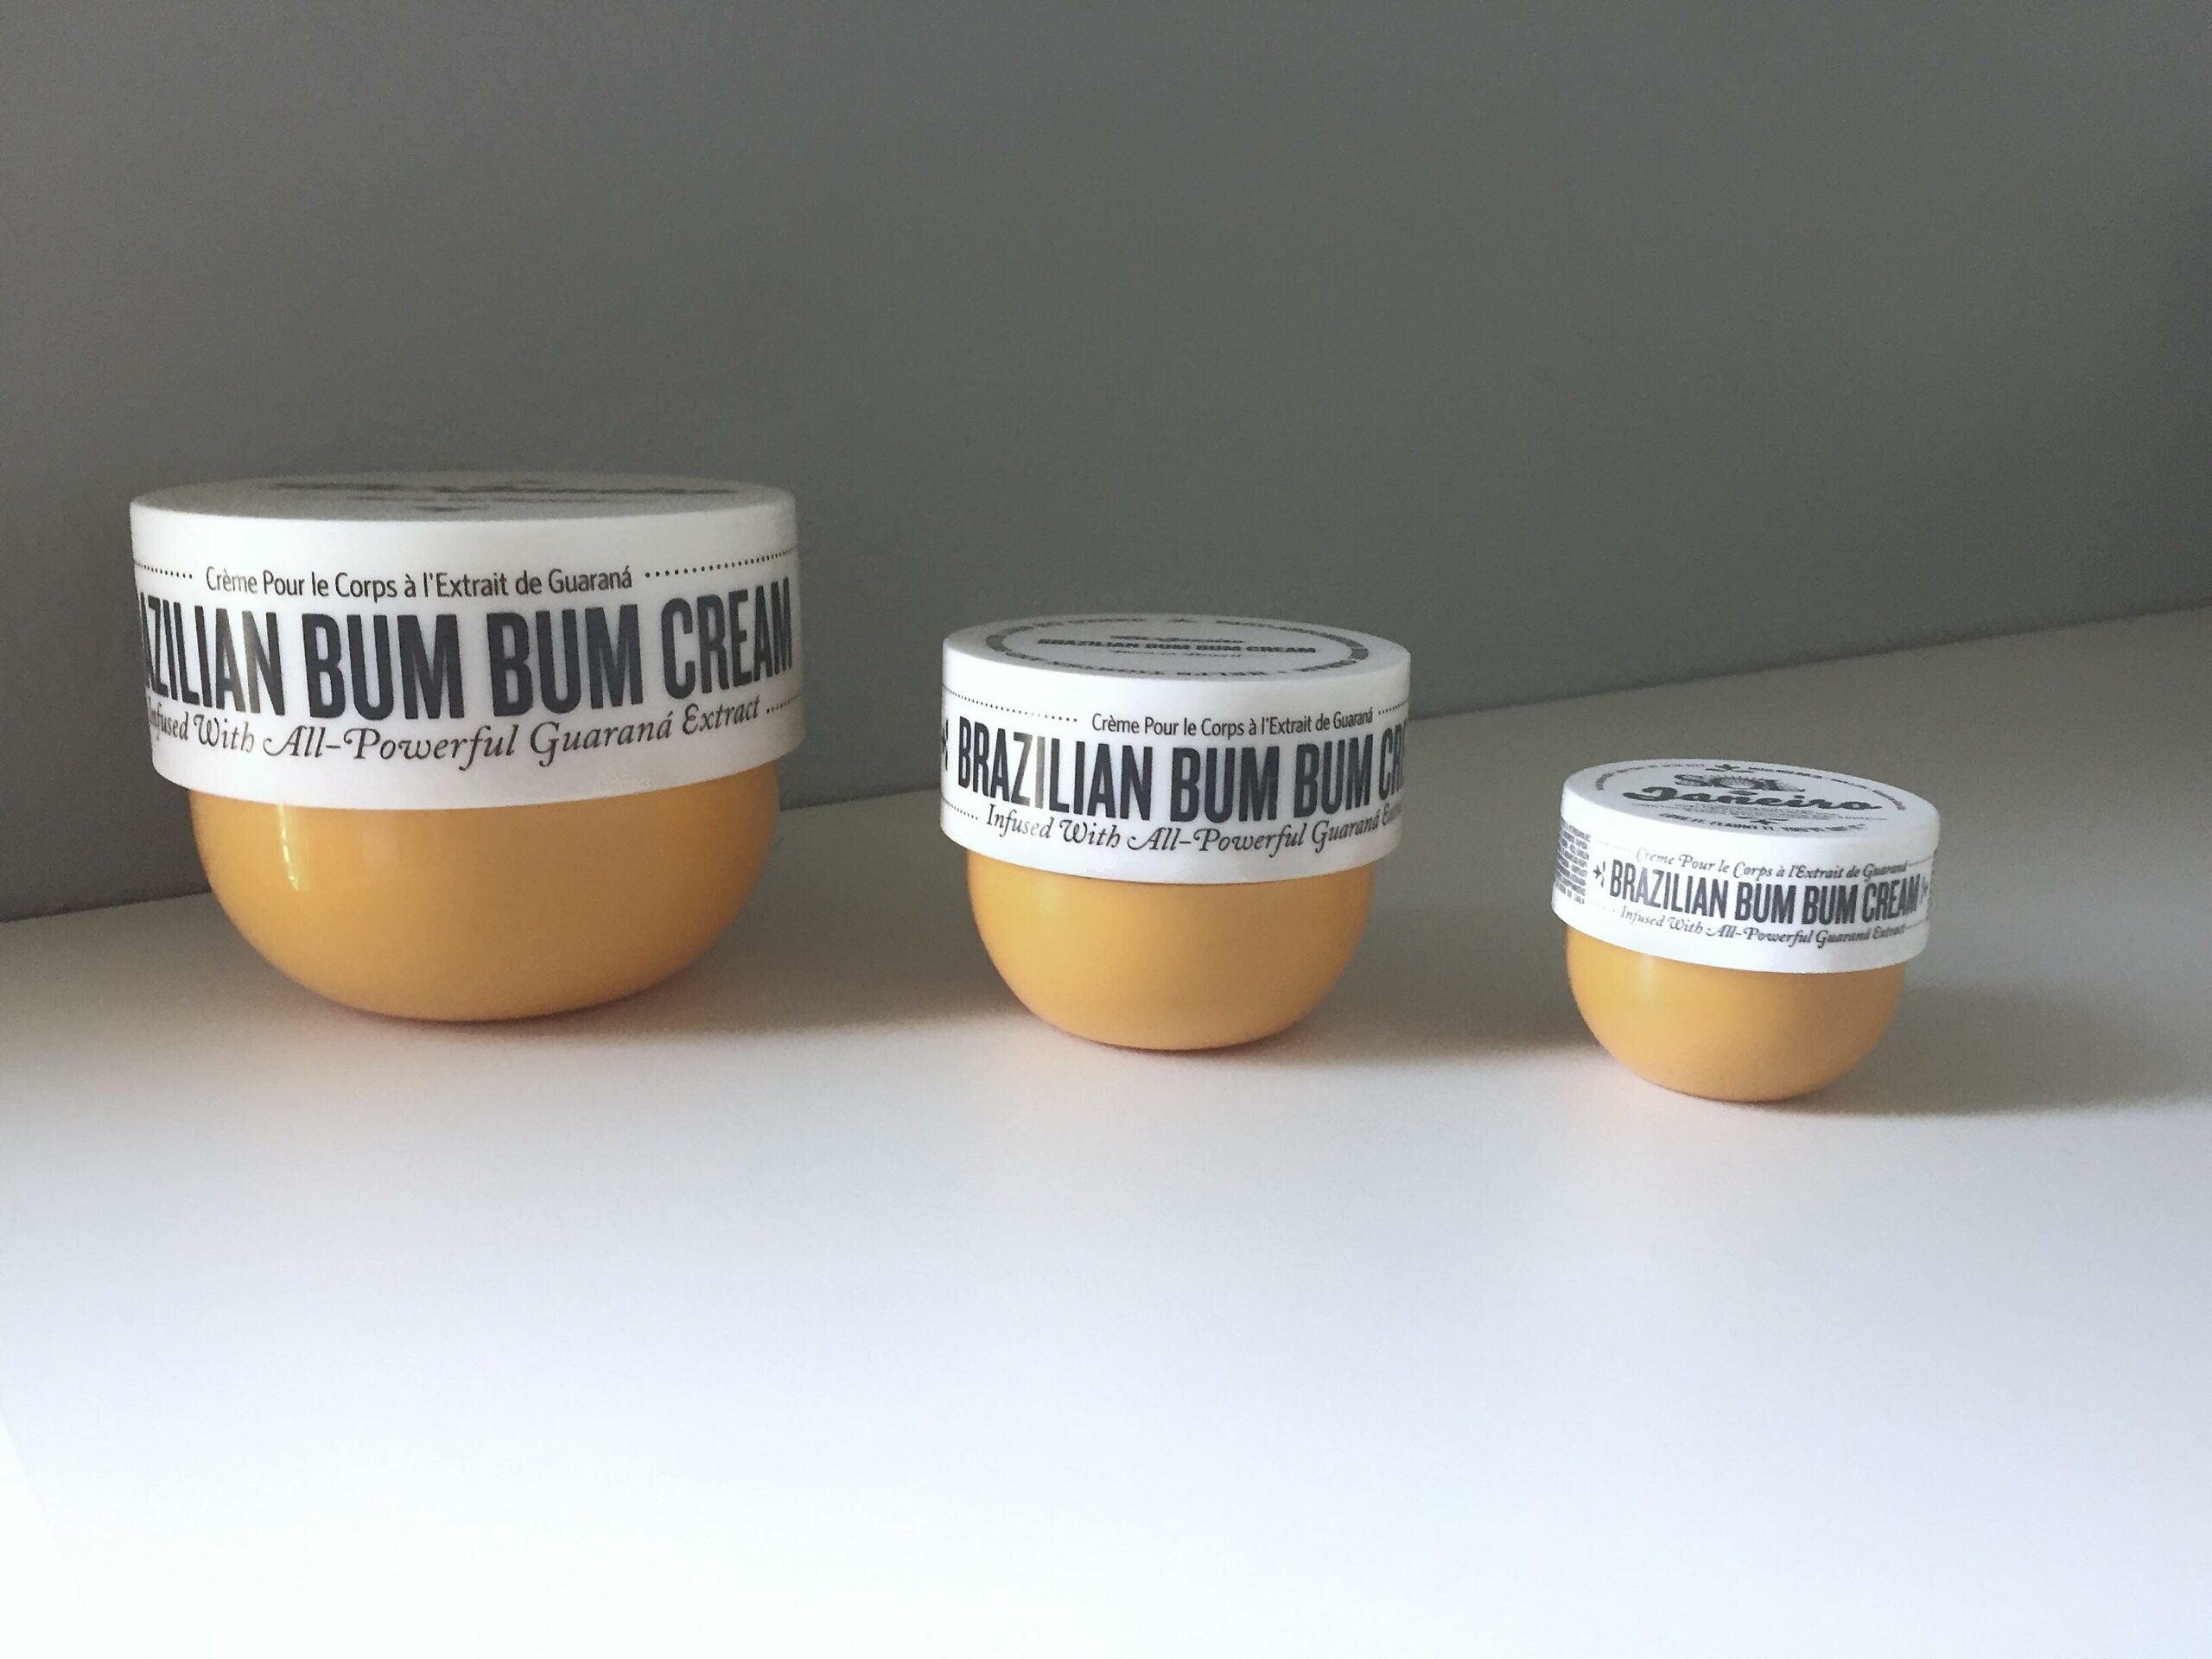 [MISC] Mini Brazilian Bum Bum Cream is an upcoming point perk at ...